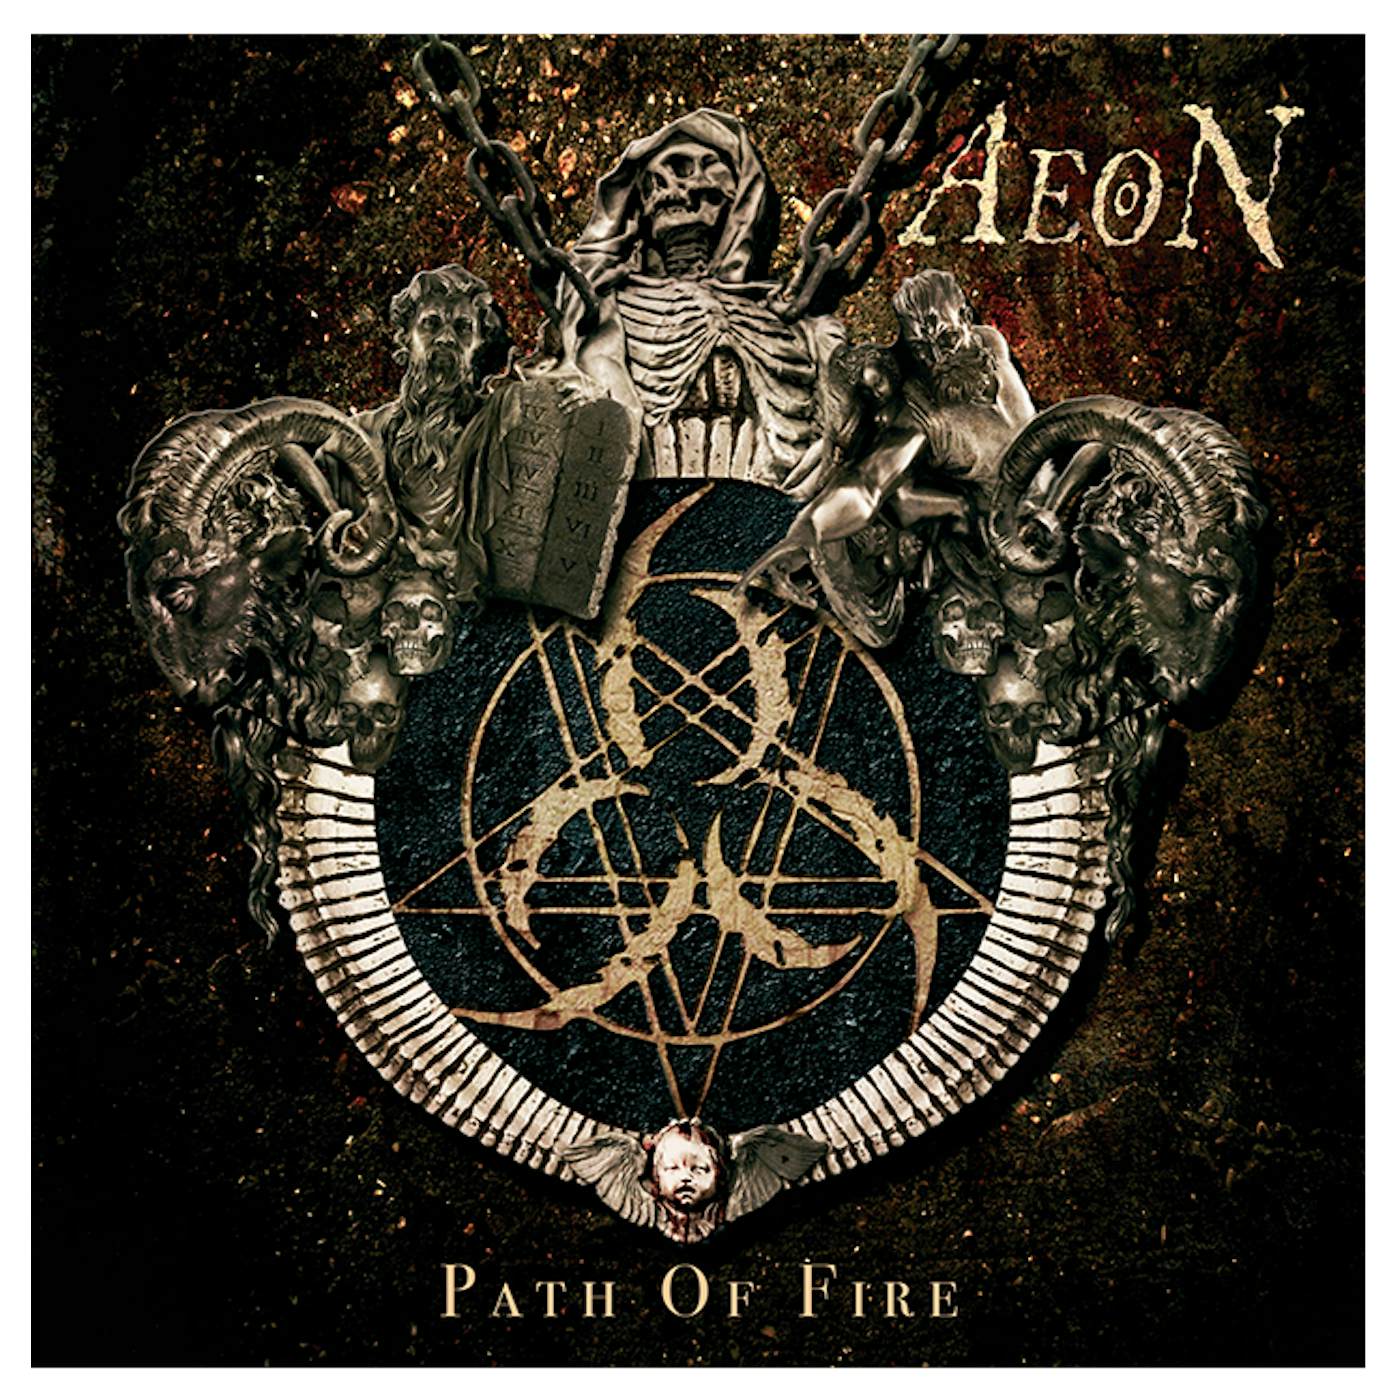 AEON - 'Path of Fire' CD